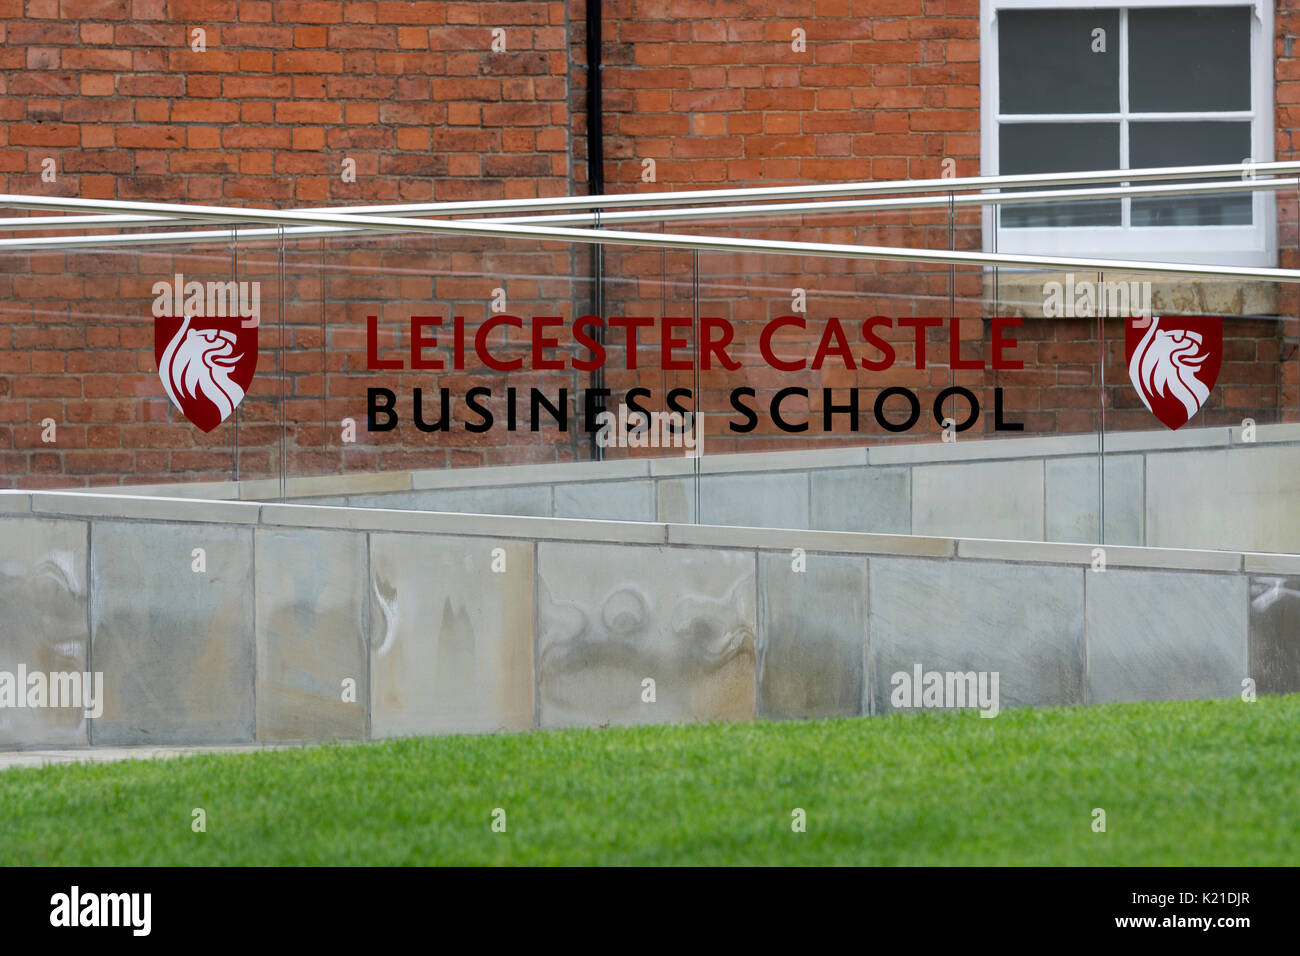 Leicester Castle Business School, Leicester, Reino Unido Foto de stock